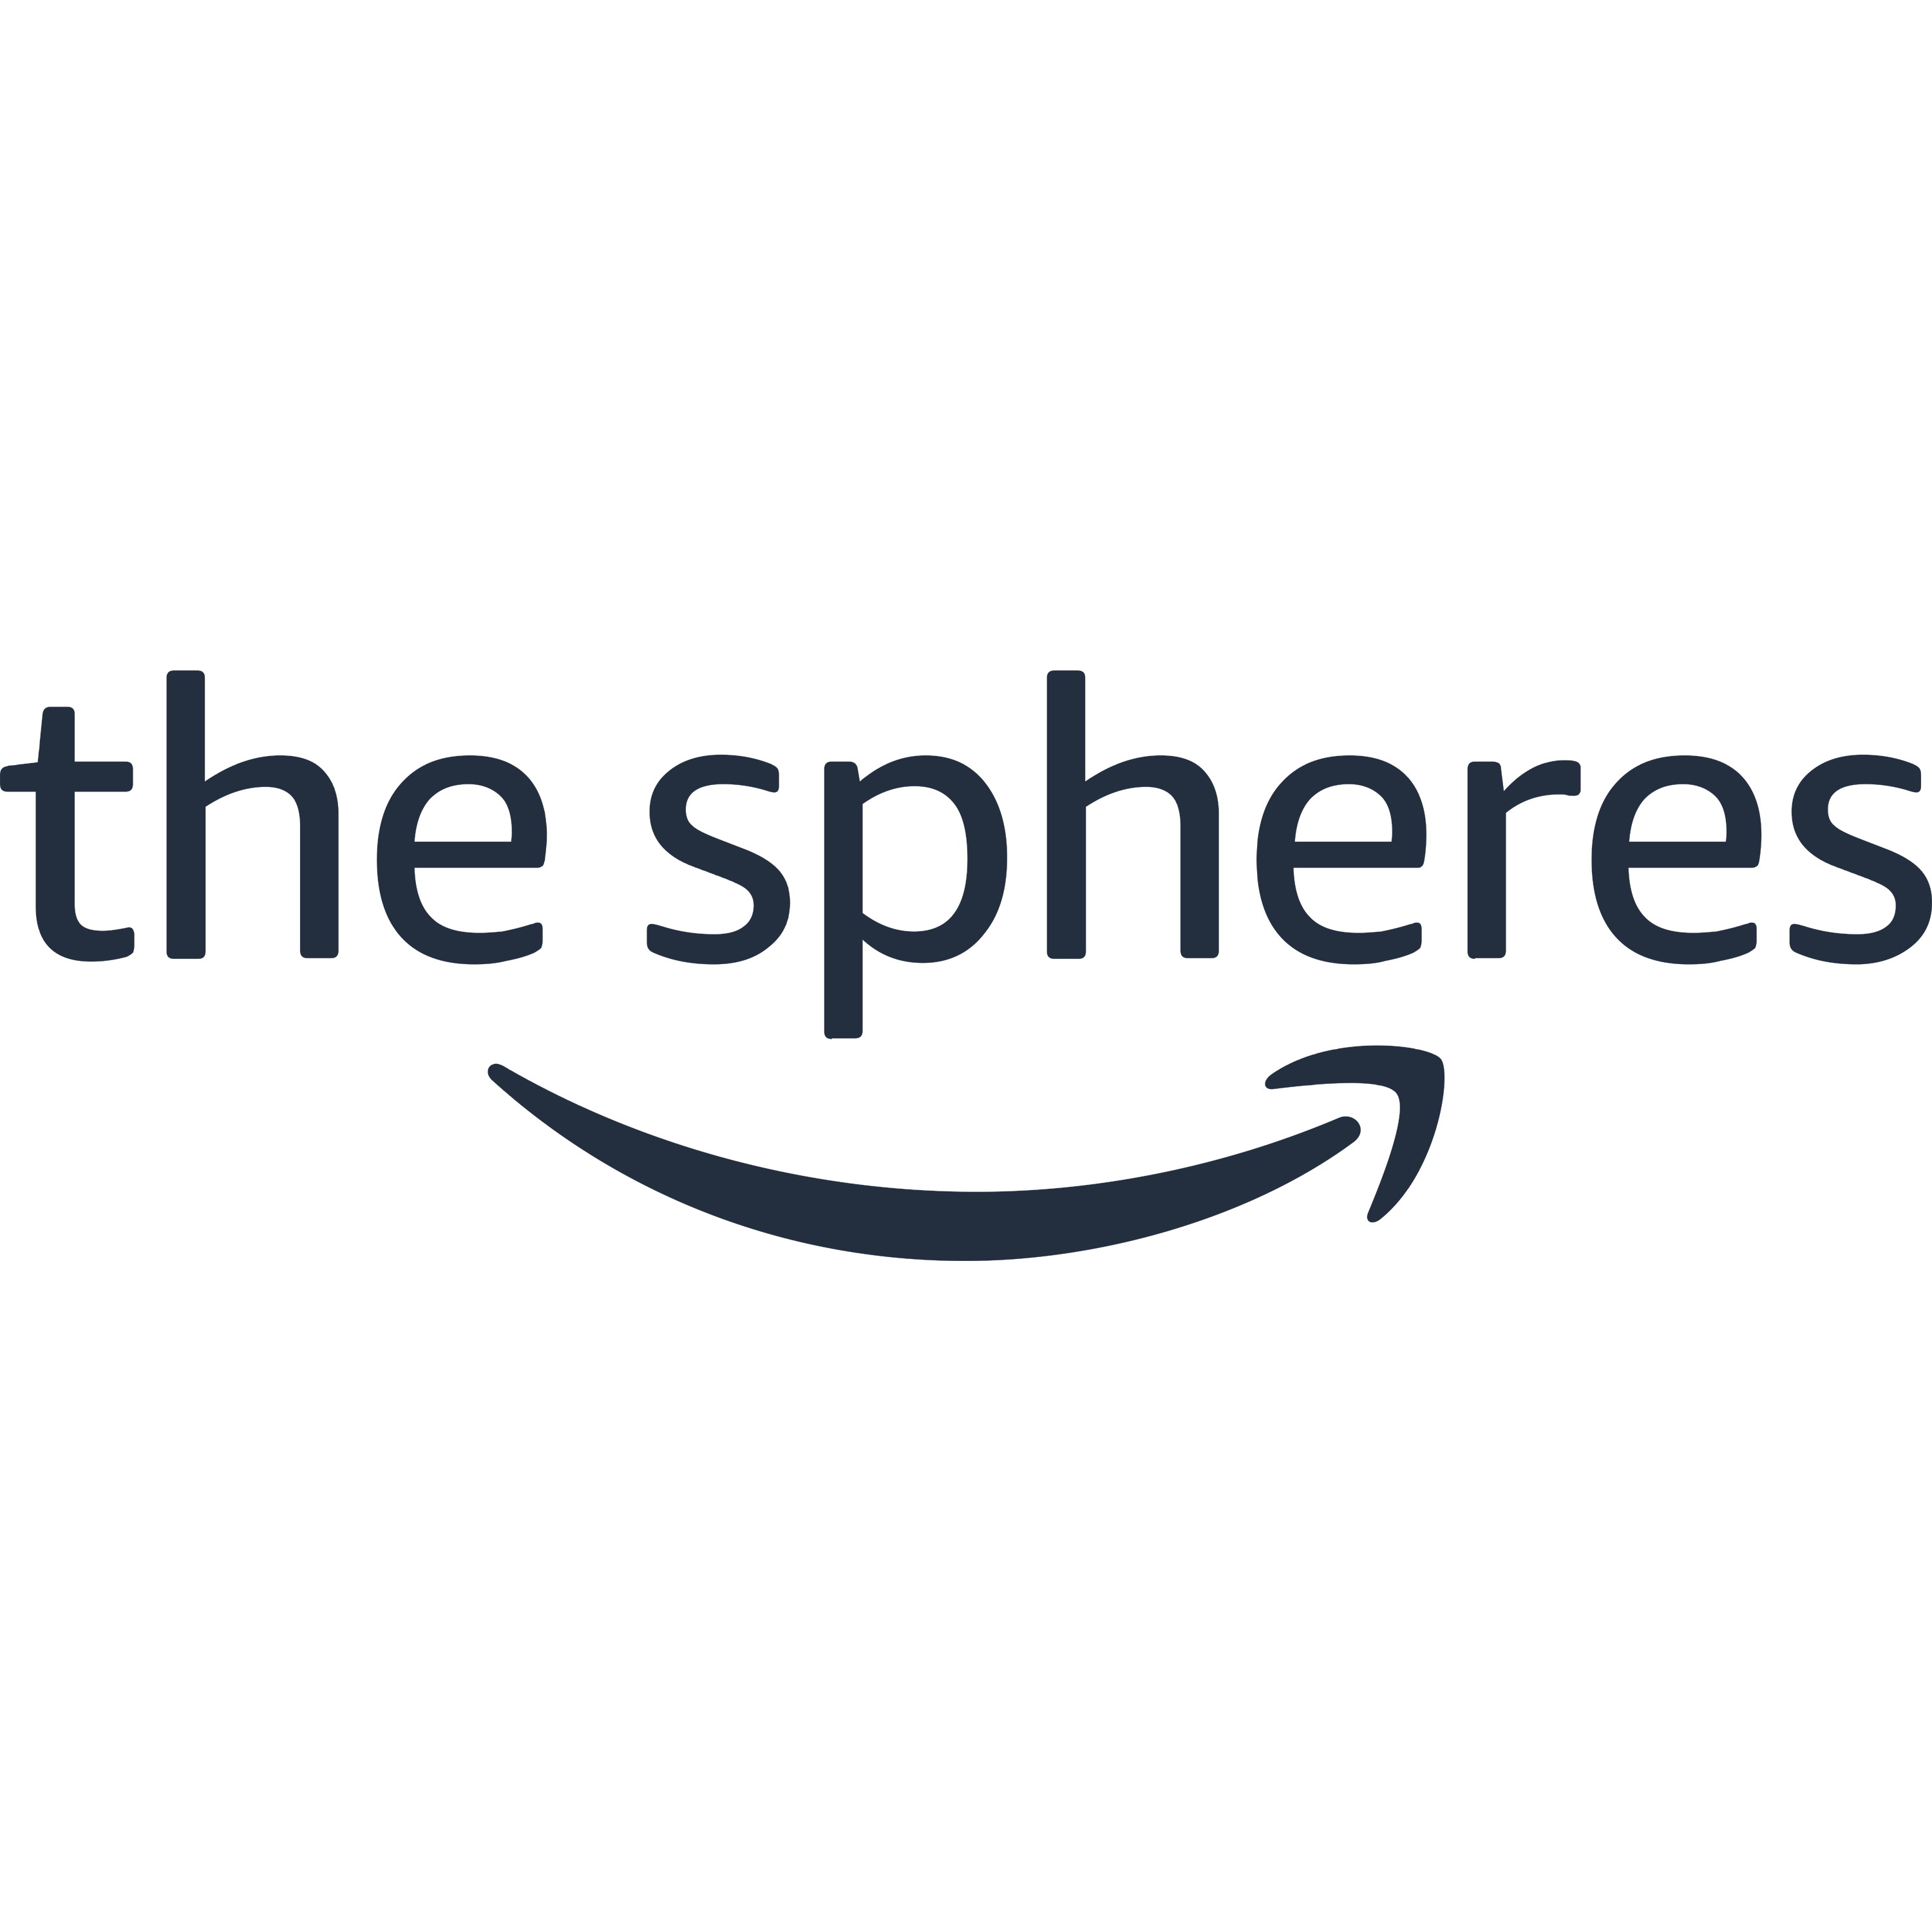 Amazon Spheres Logo Transparent Image